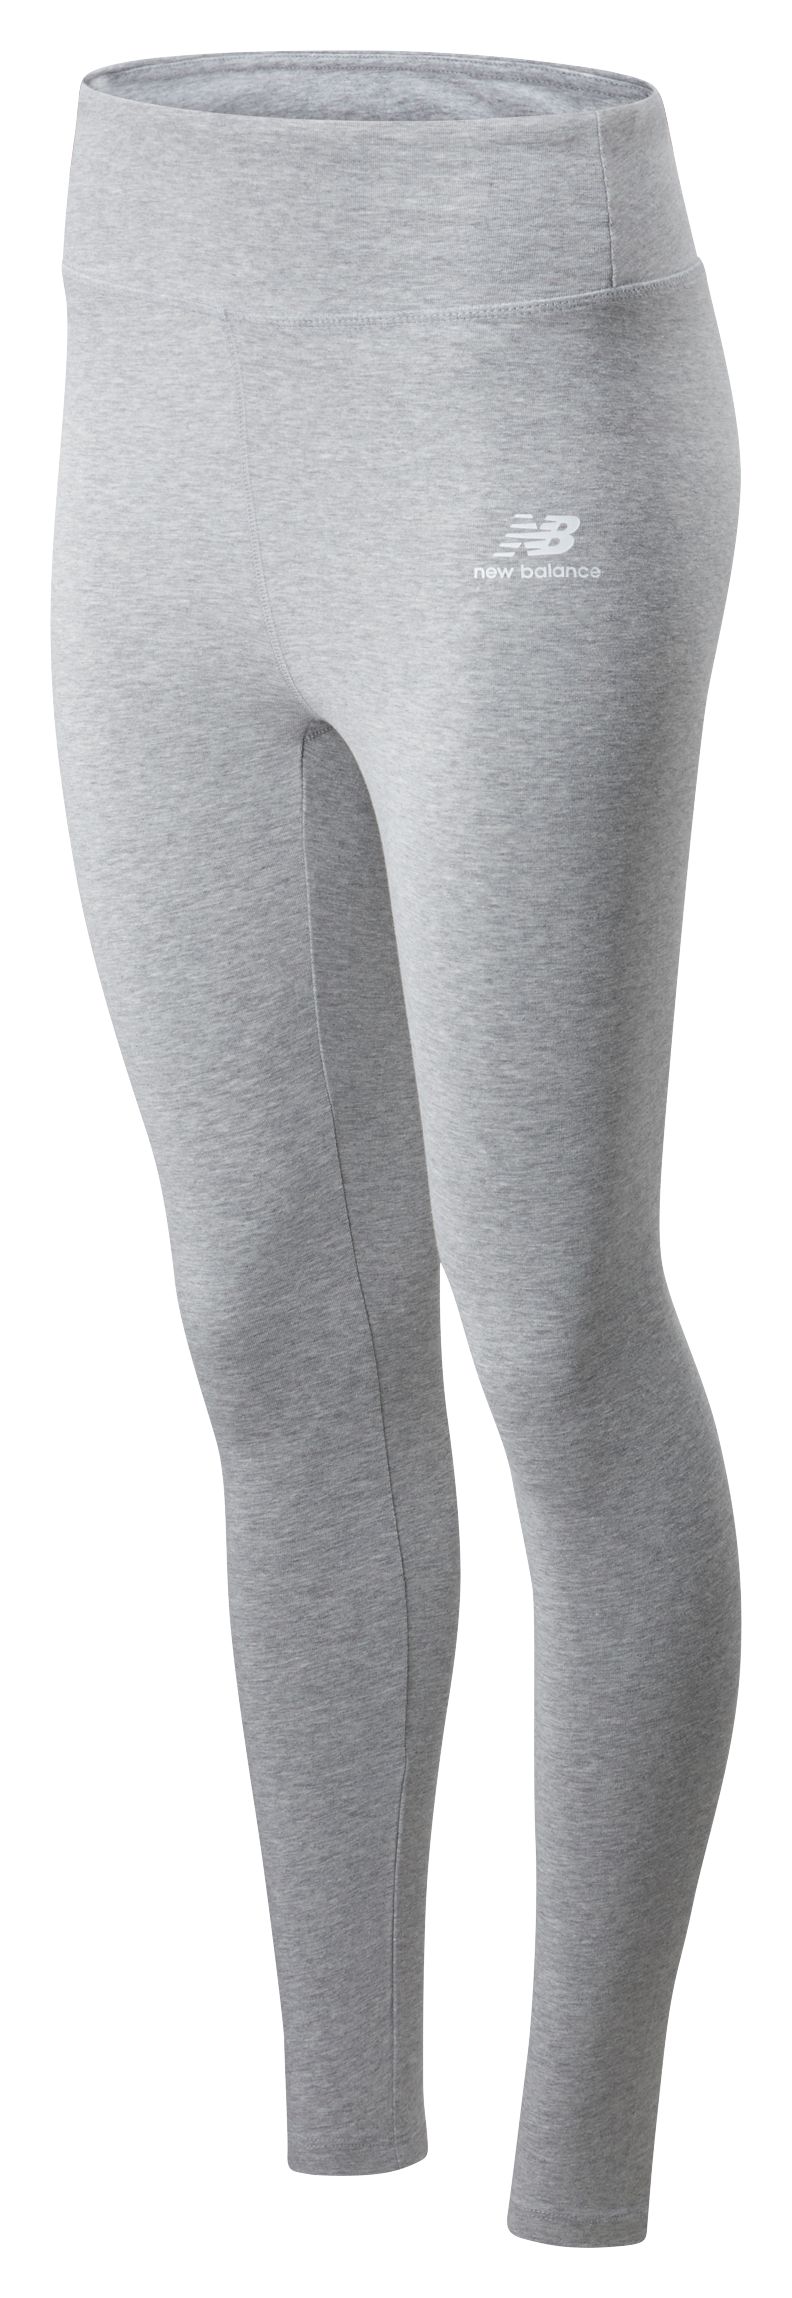 Workout Leggings - Women's Sport Pants 